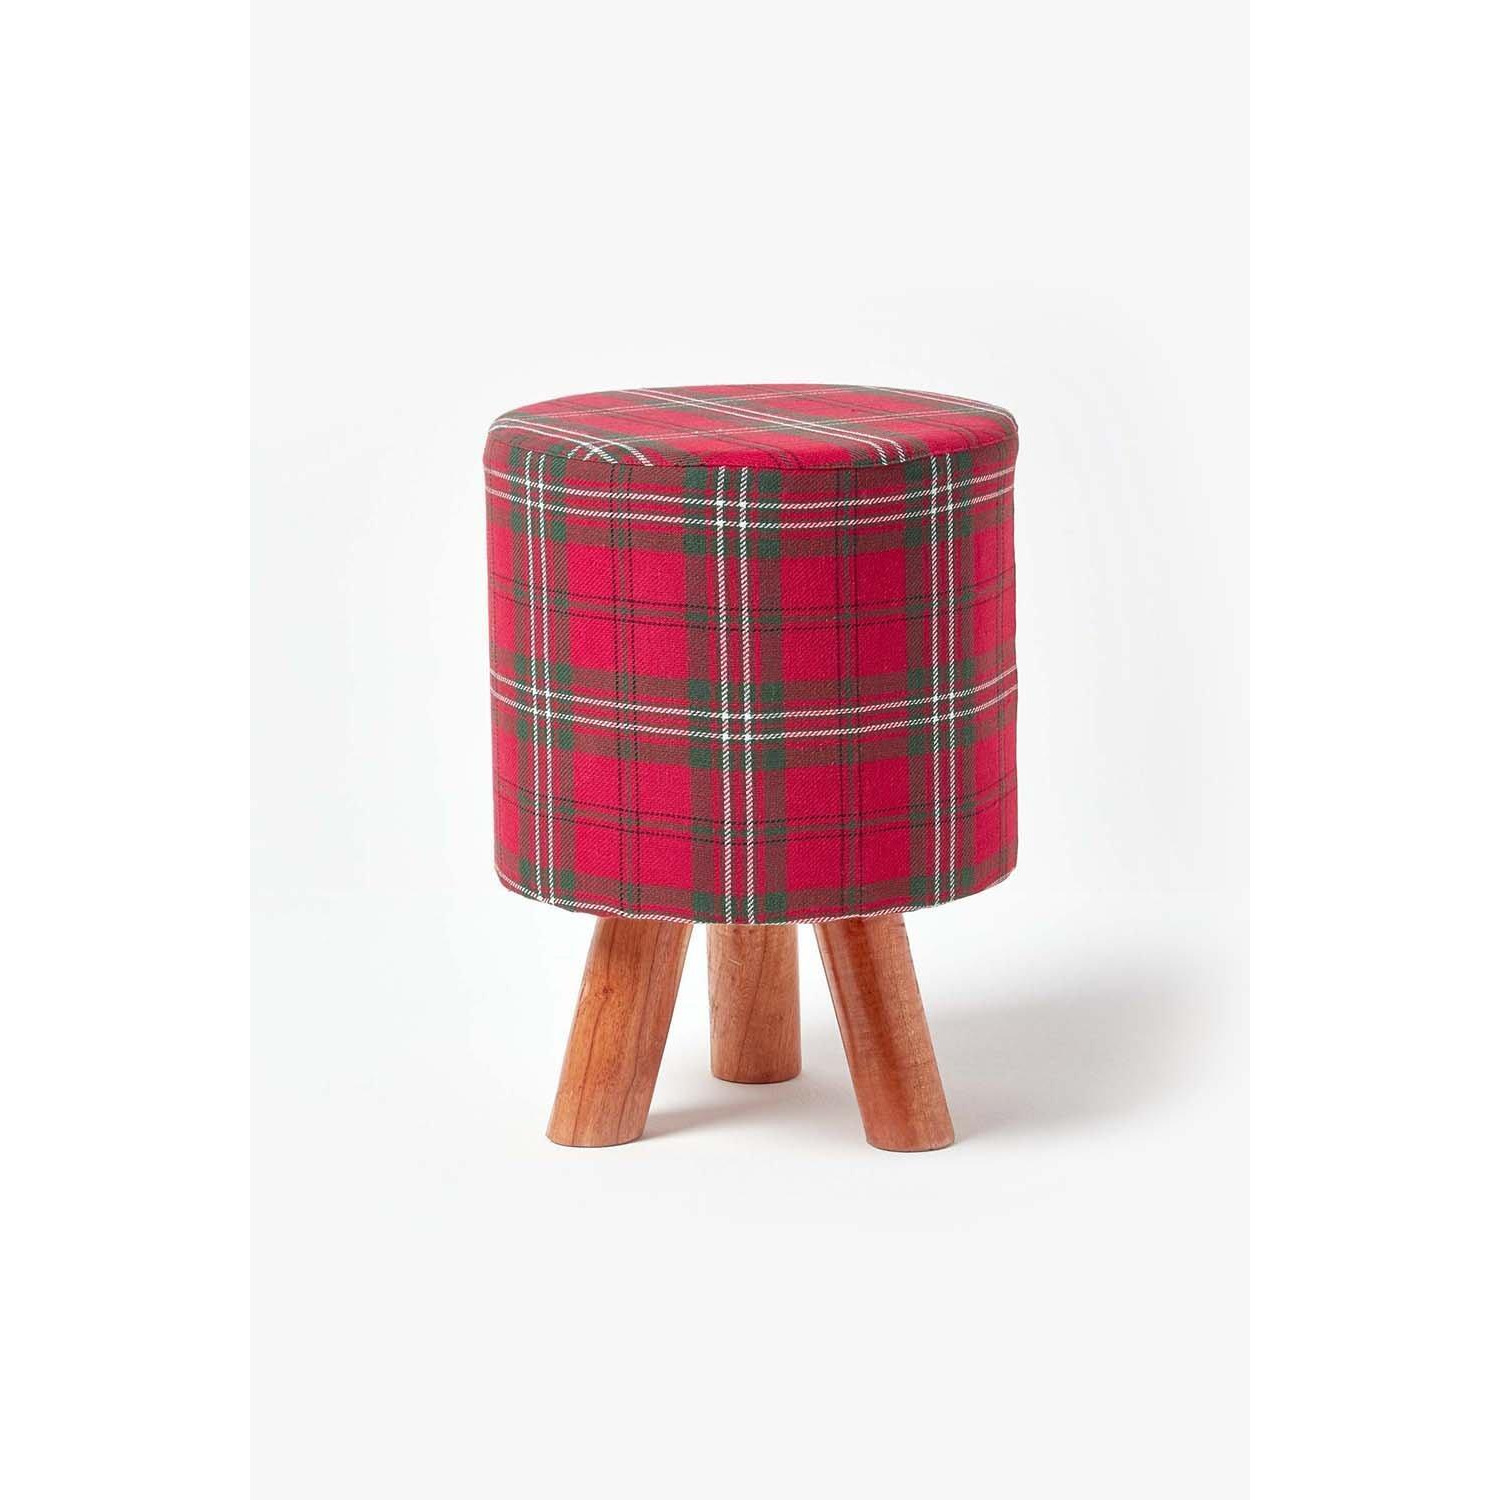 Tartan Fabric Footstool with Wooden Legs - image 1